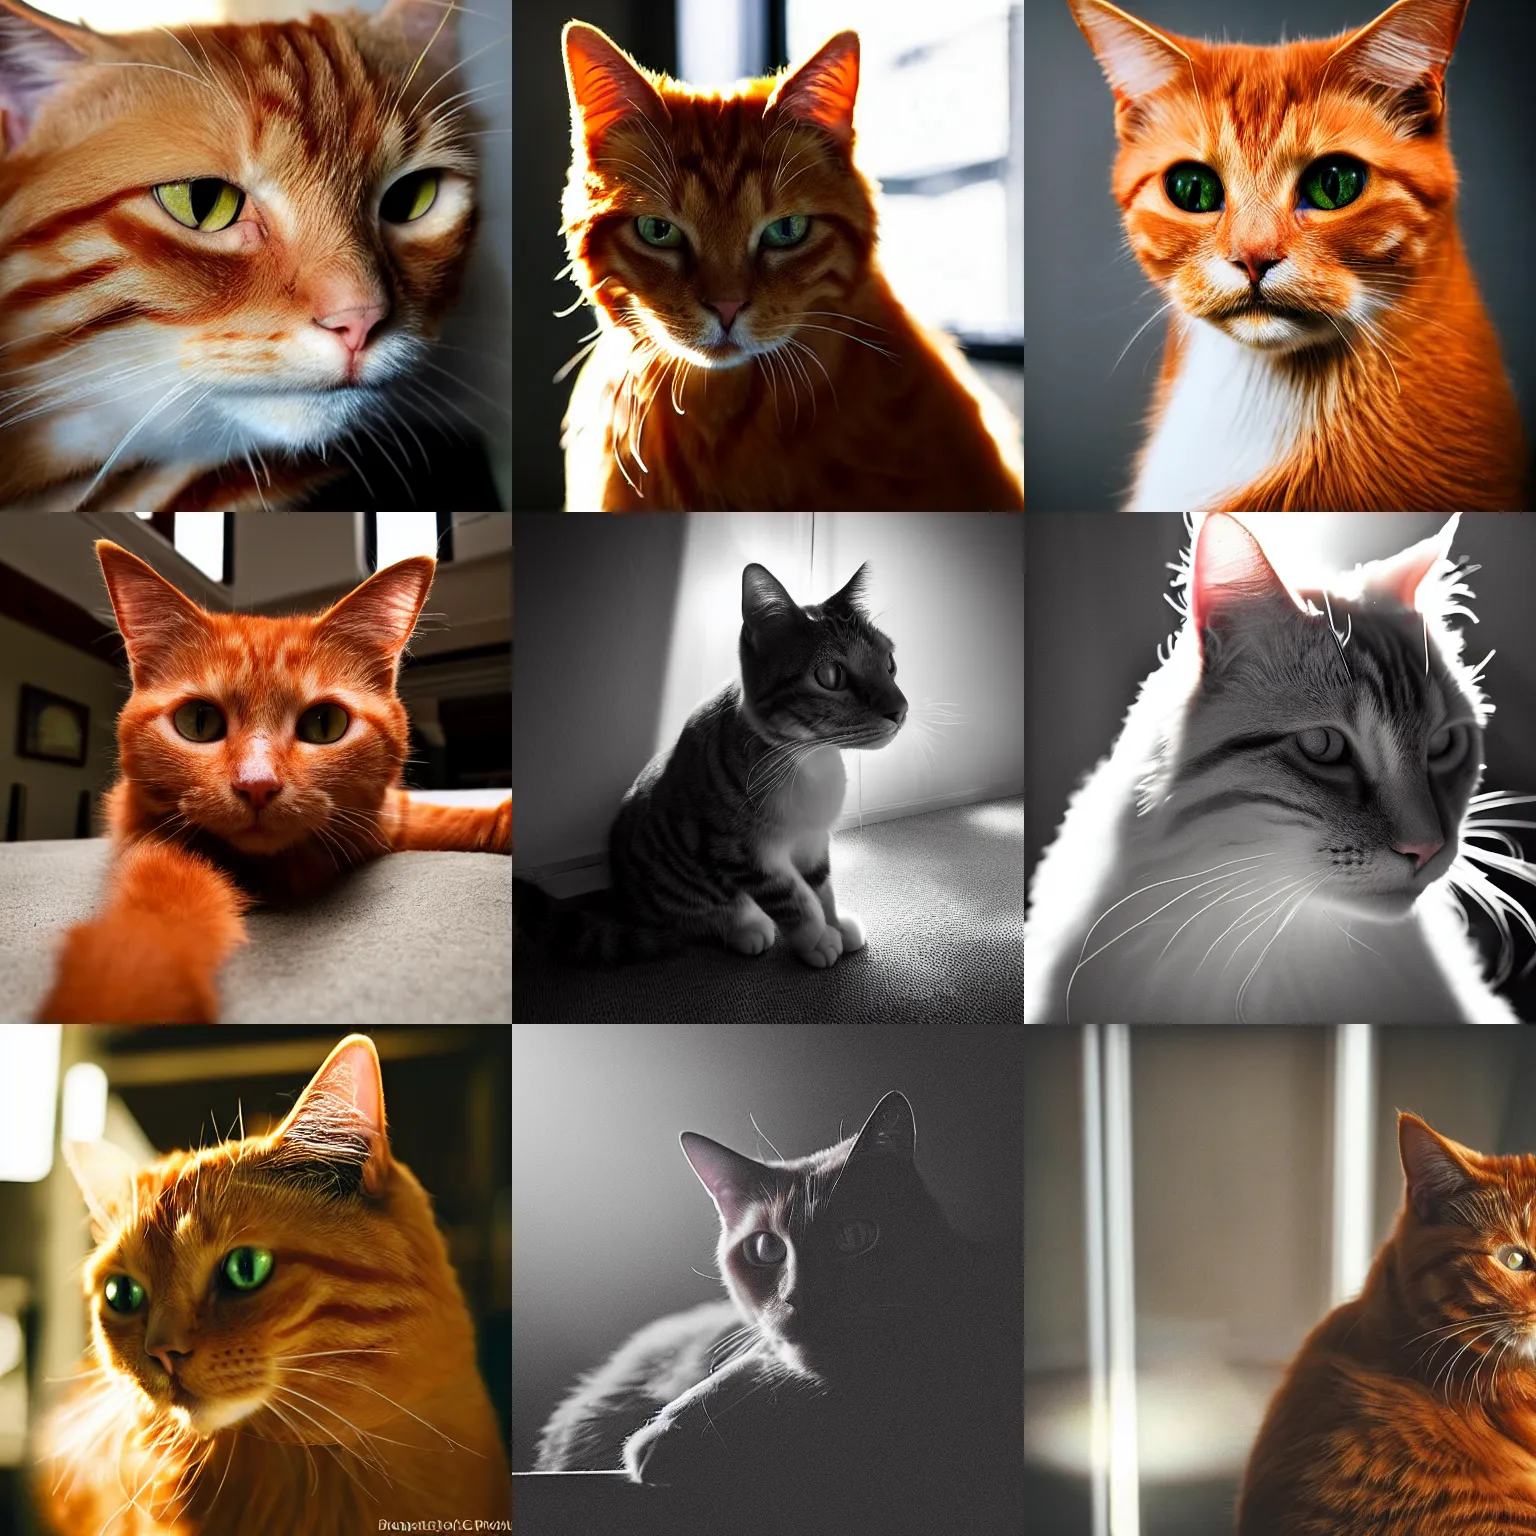 Prompt: ginger cat, dramatic lighting